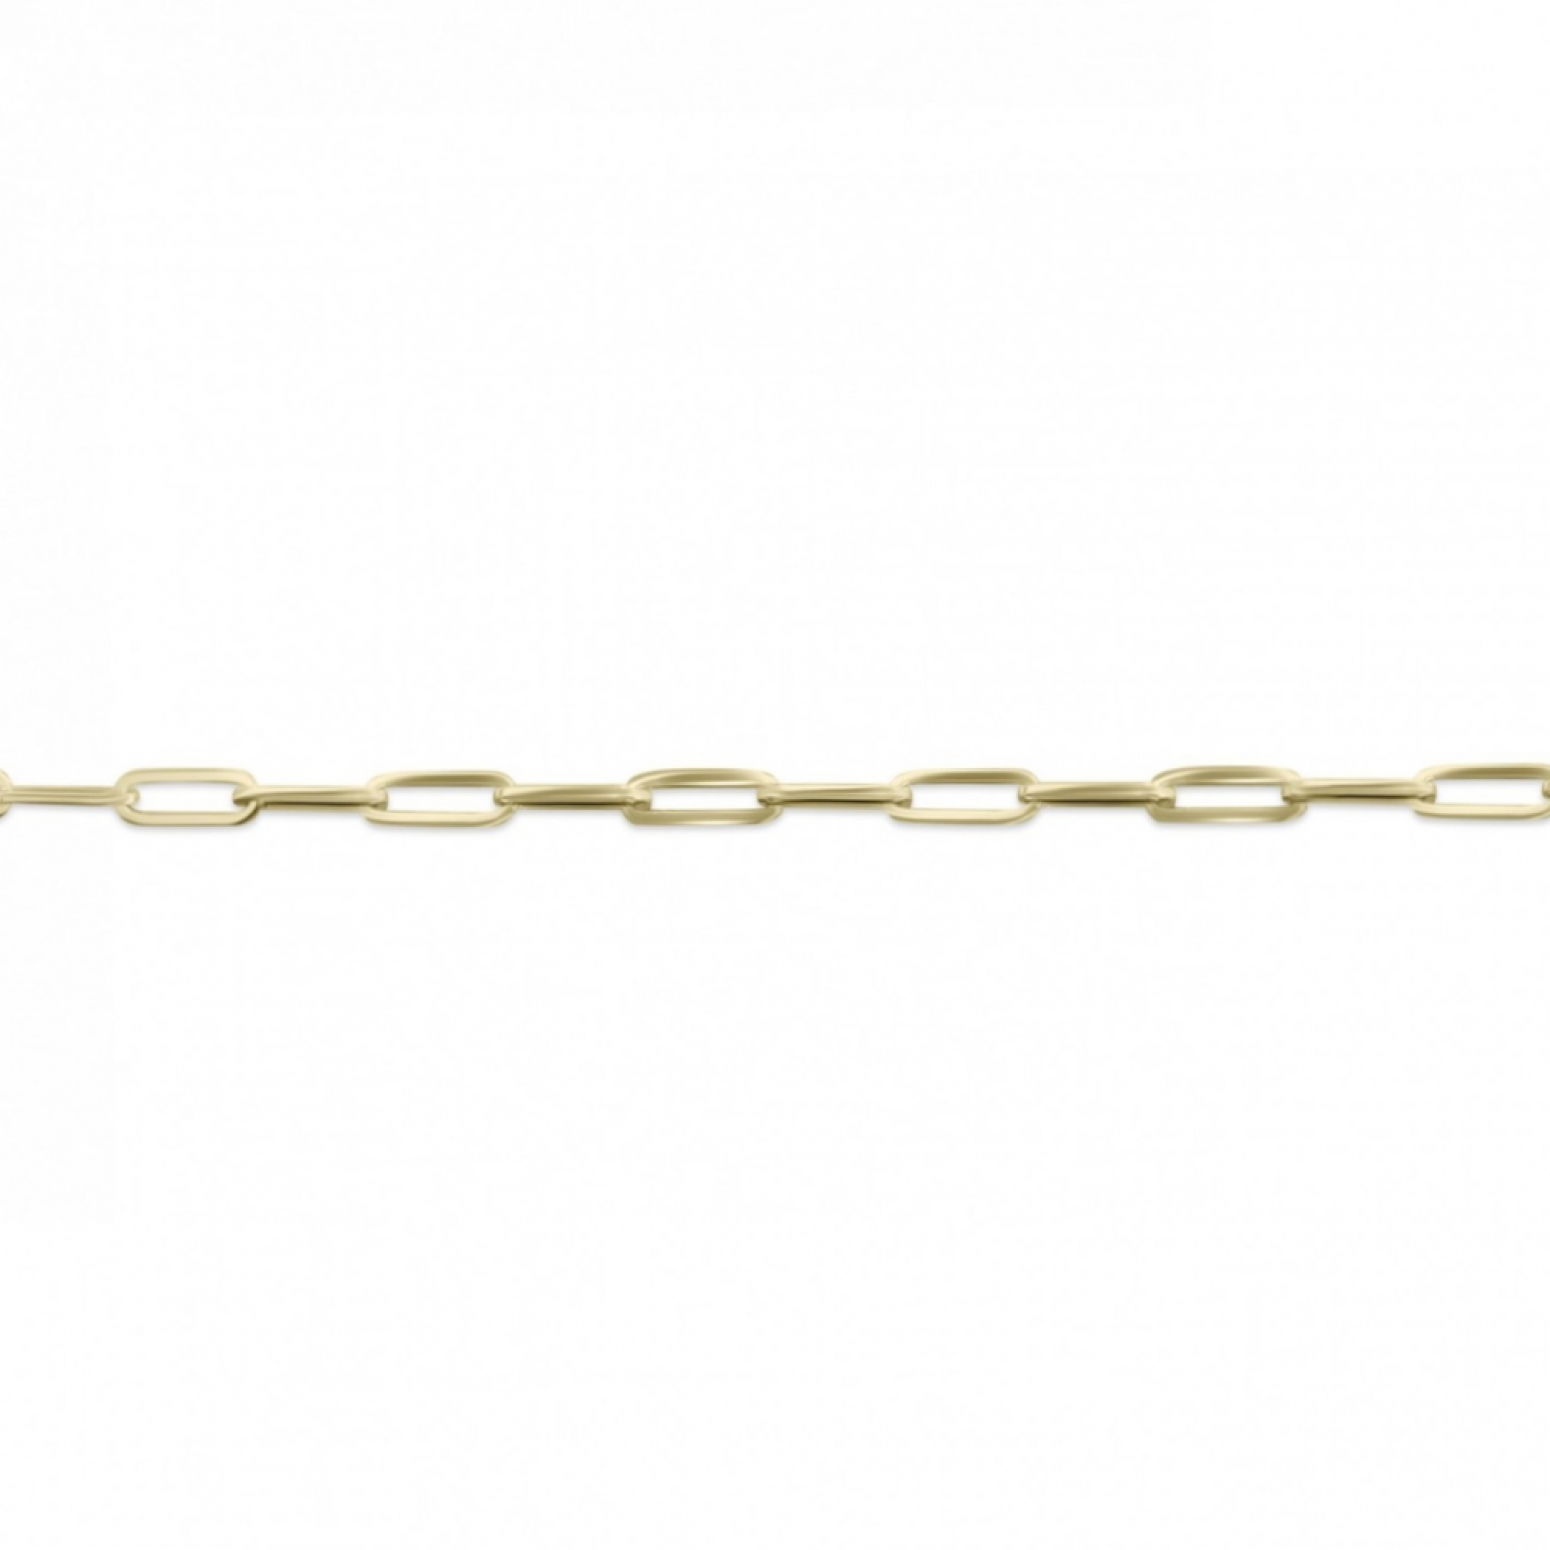 Bracelet Κ14 gold, br2817 BRACELETS Κοσμηματα - chrilia.gr